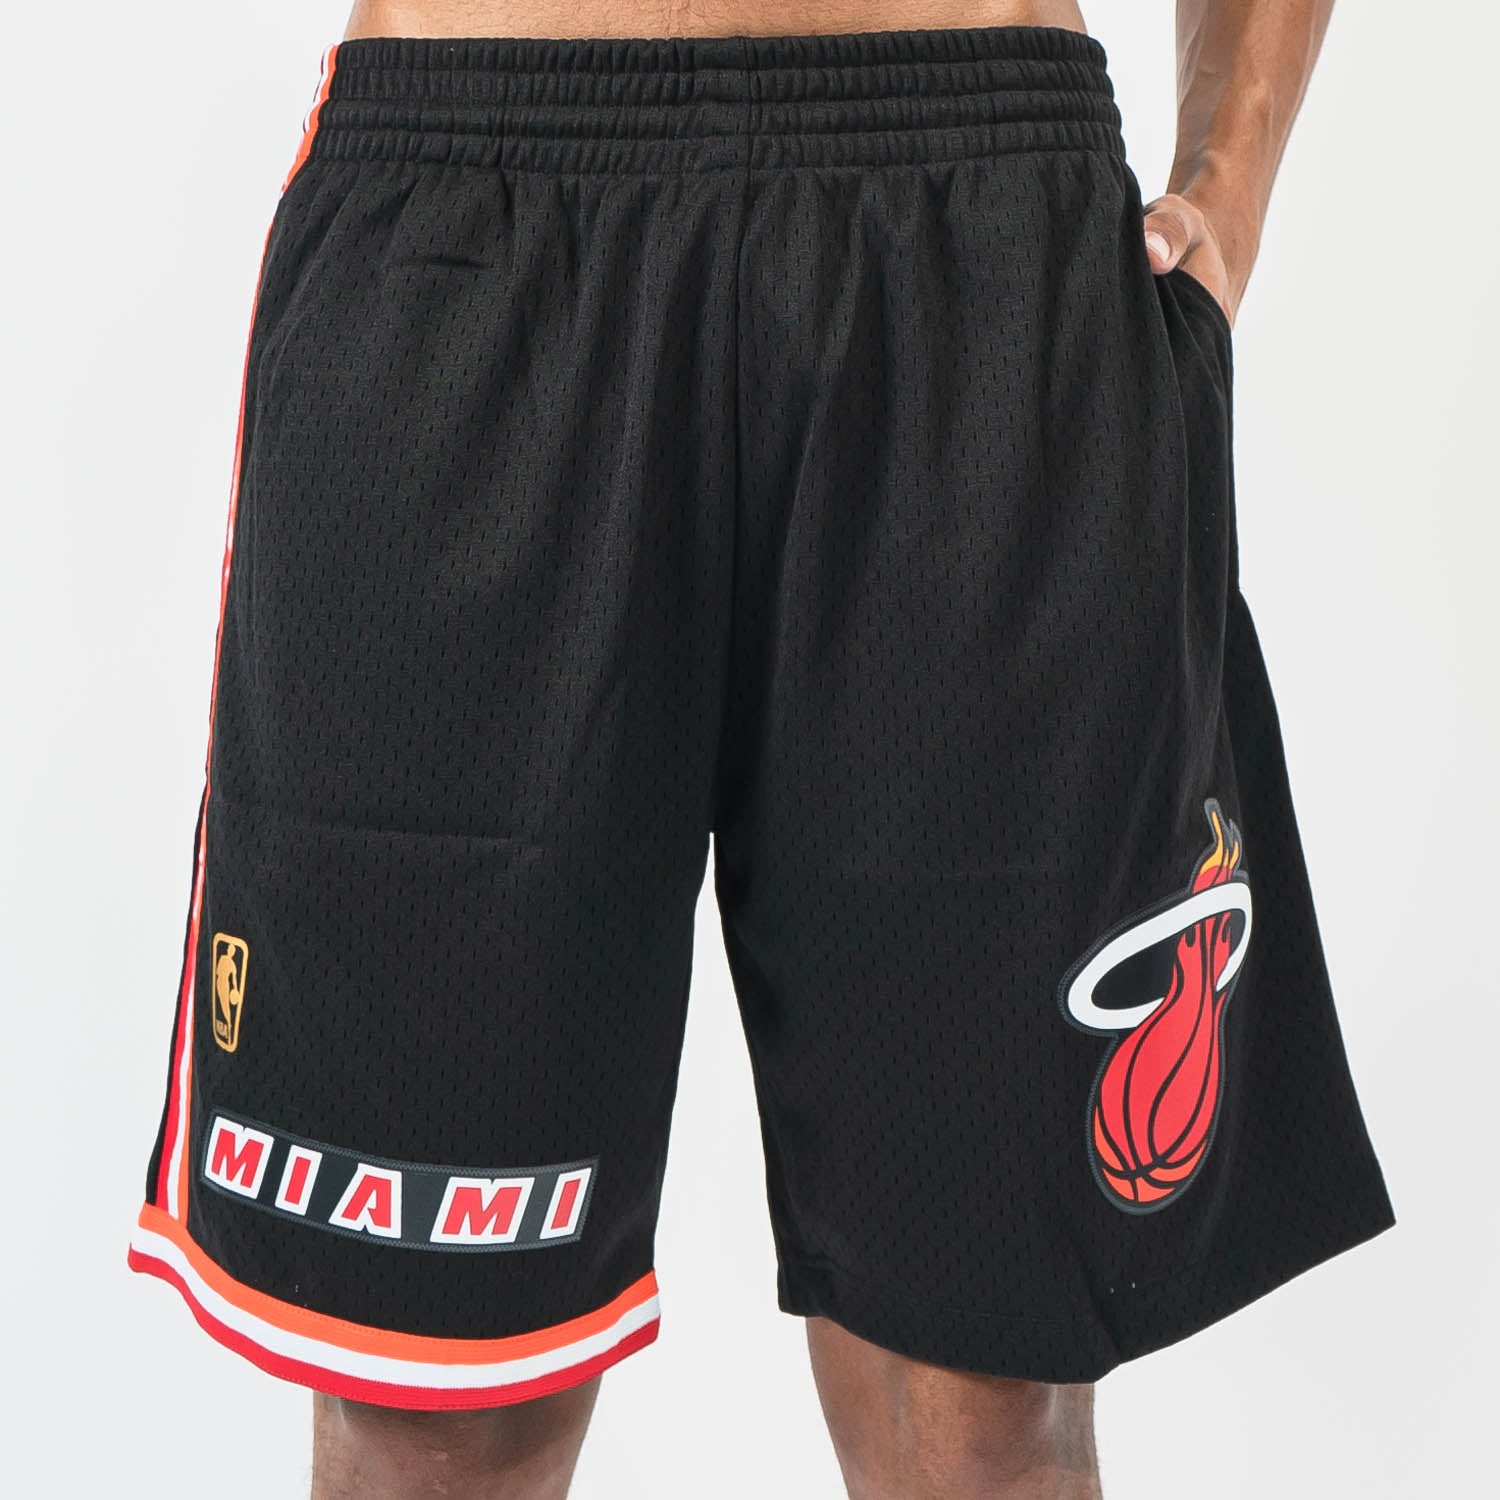 MiamiHeatmen Throwback Basketball Shorts Pocket Pant Pantalon